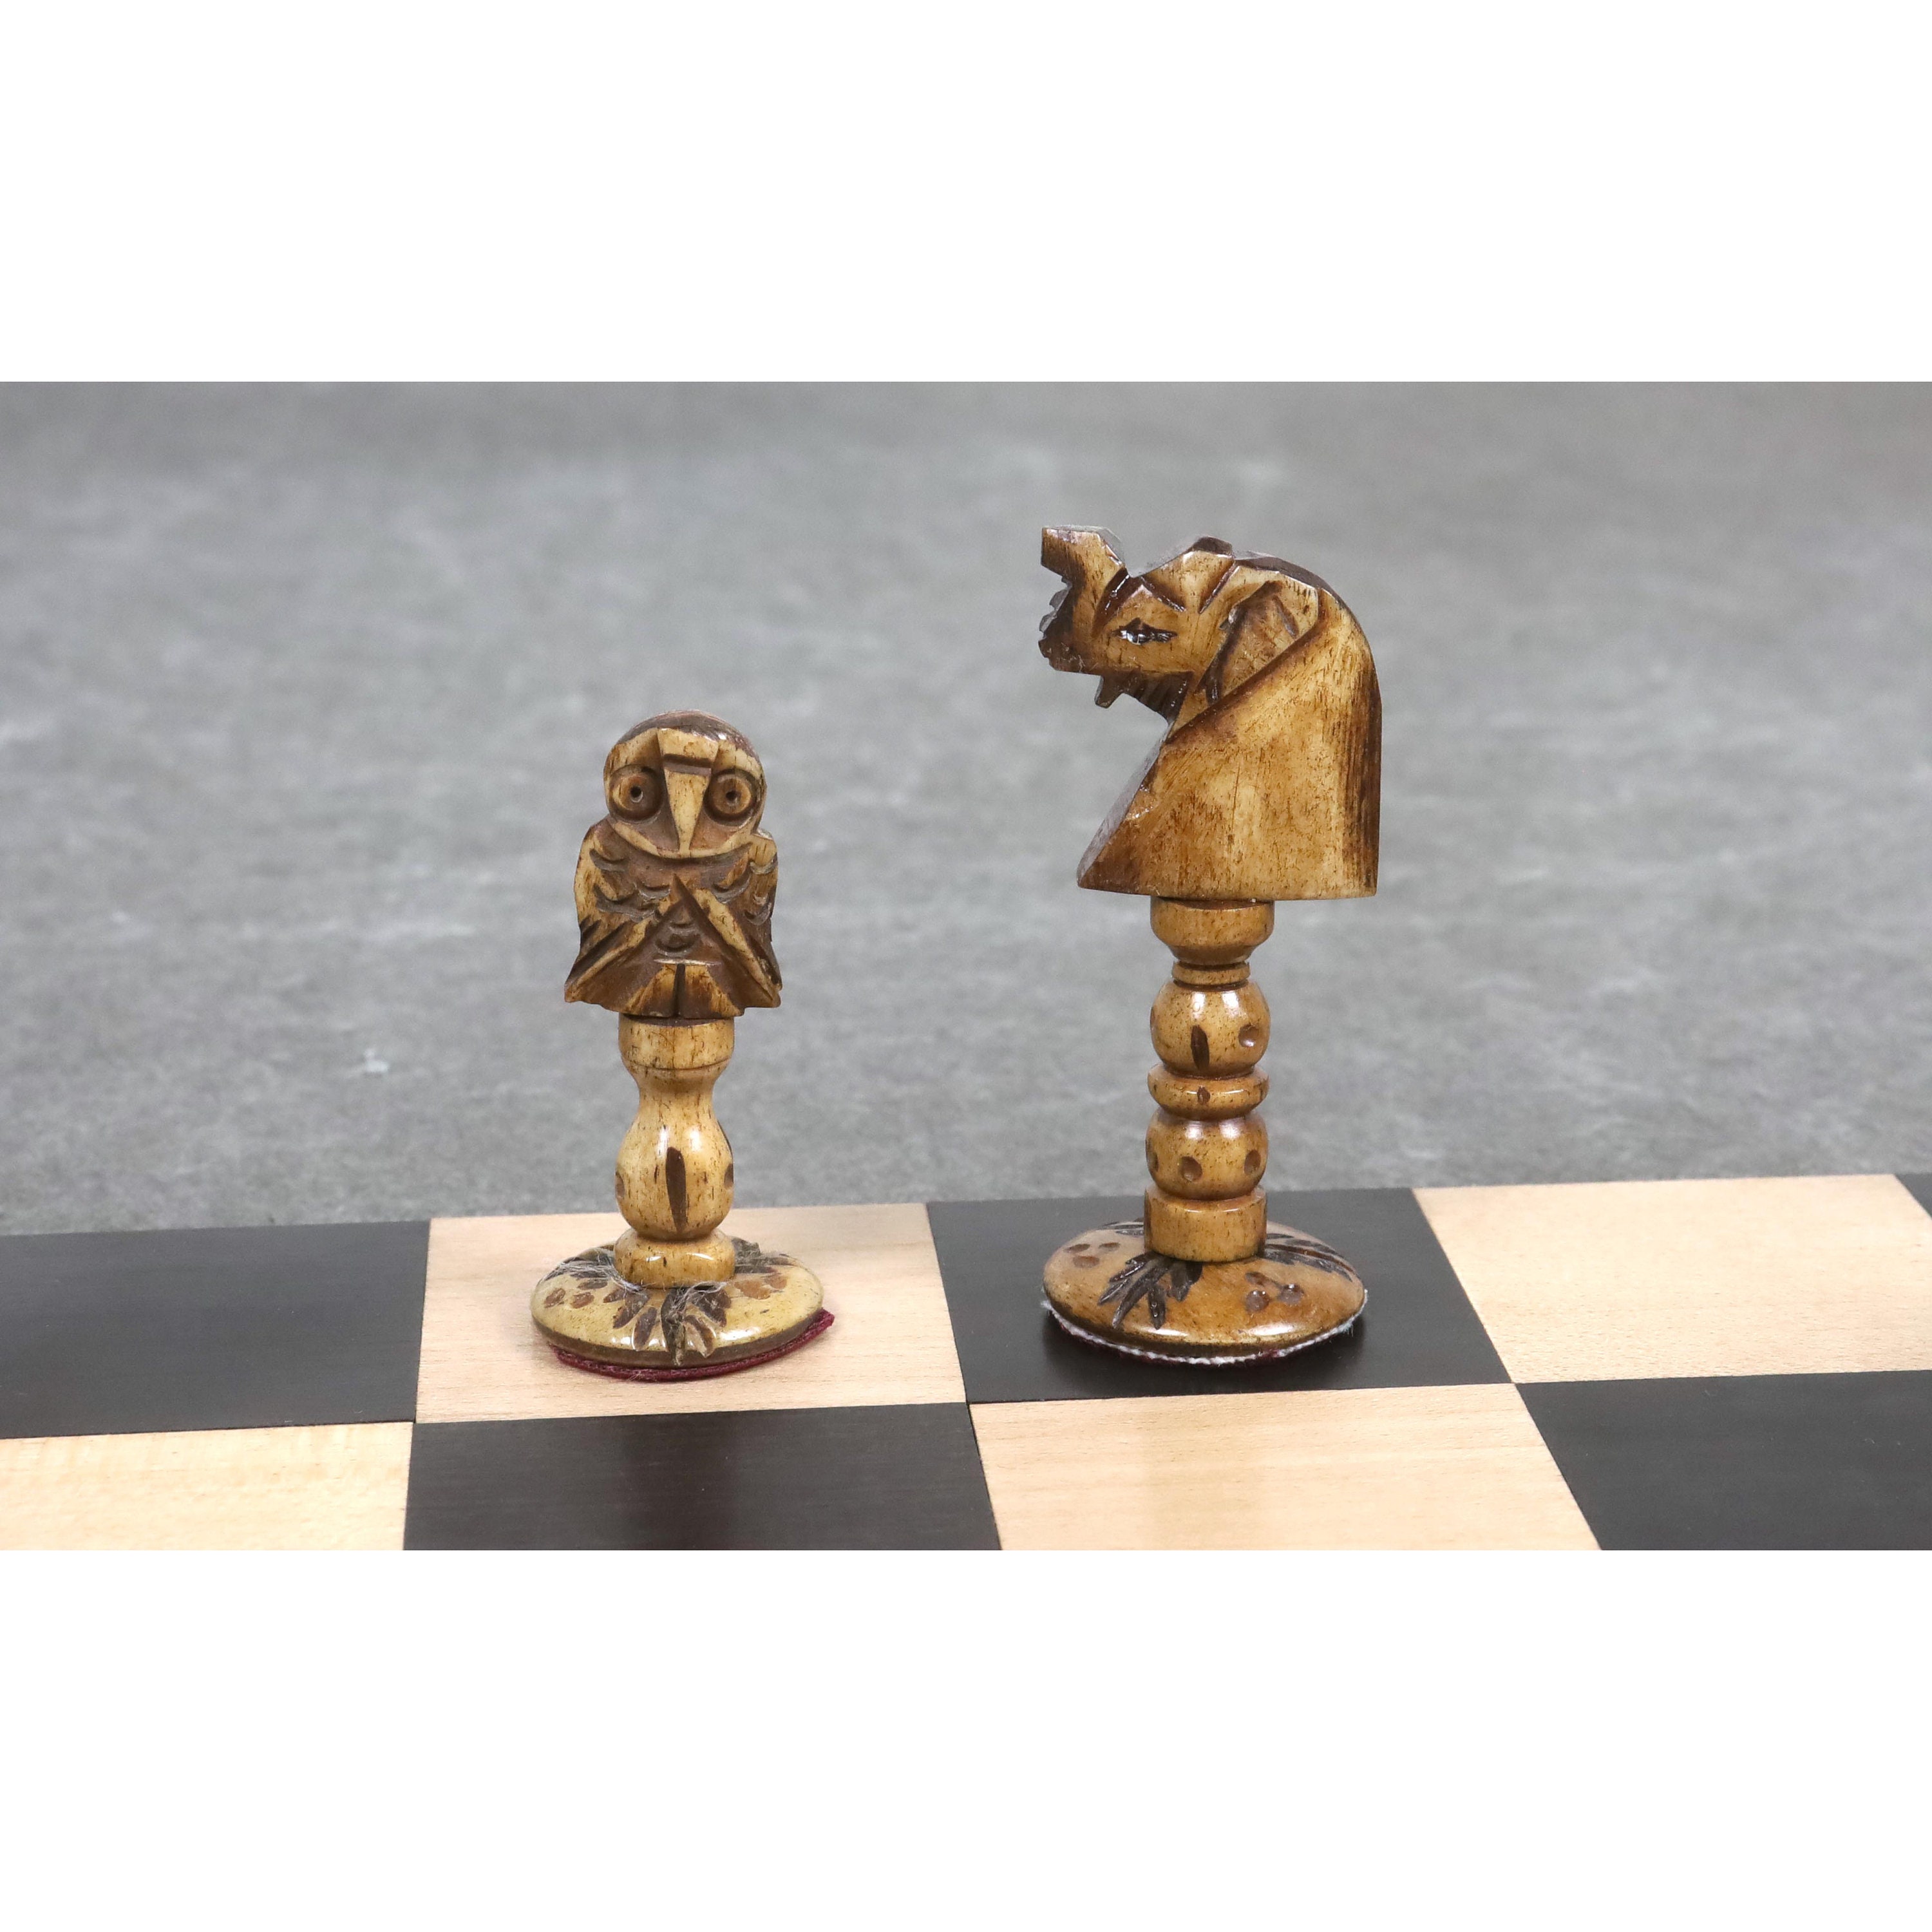 Animal Kingdom Themed Chessmen & Exotic Board Chess Set - Fancy Chess